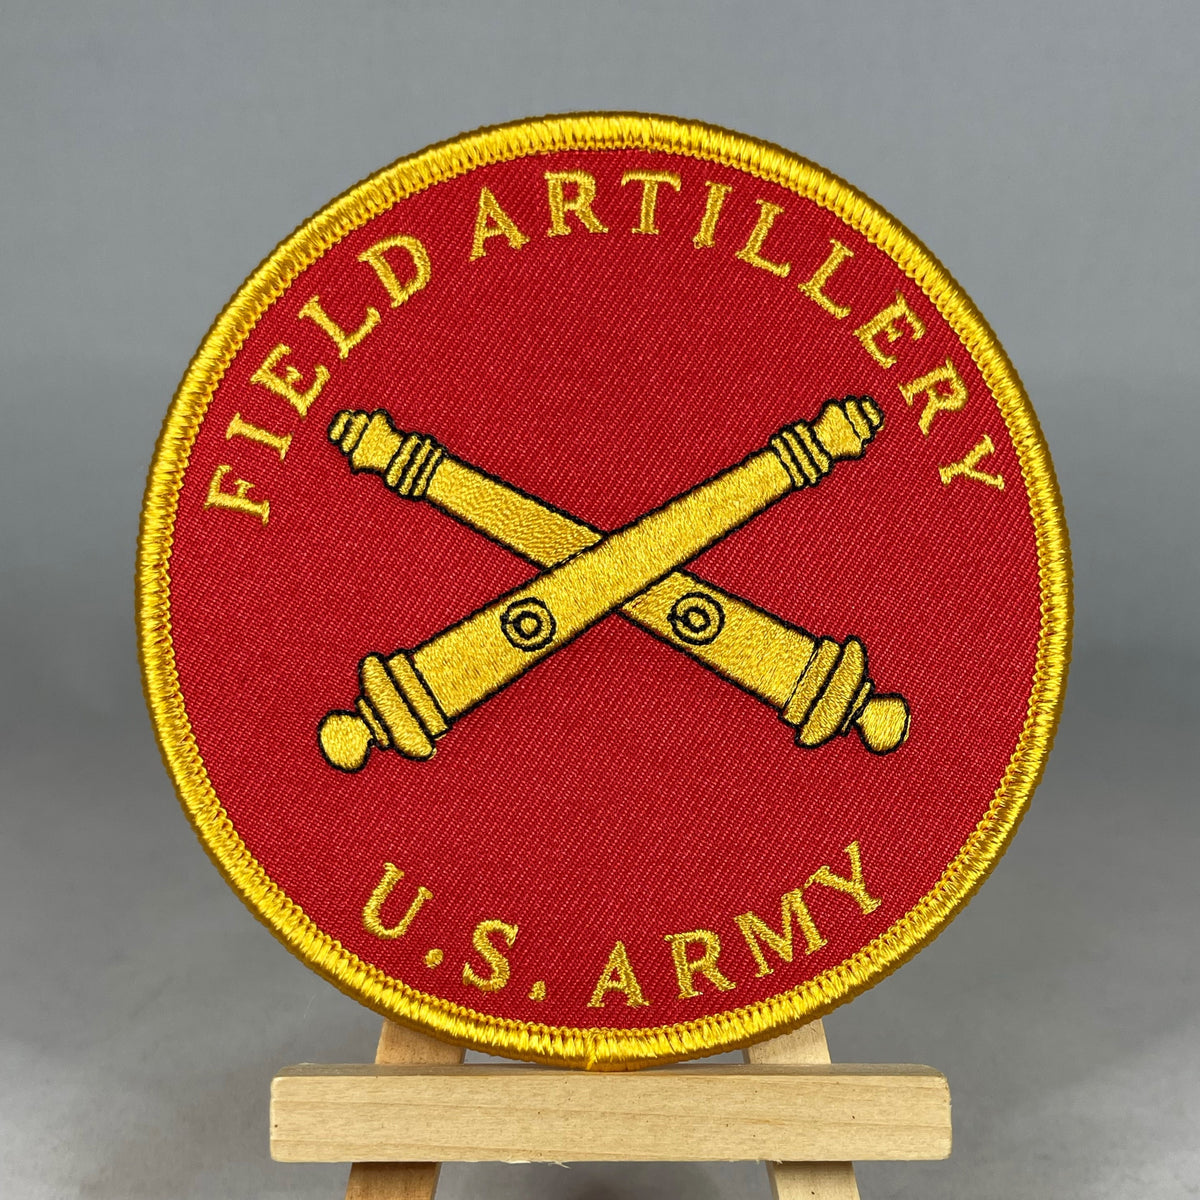 U.S. Army Field Artillery Patch